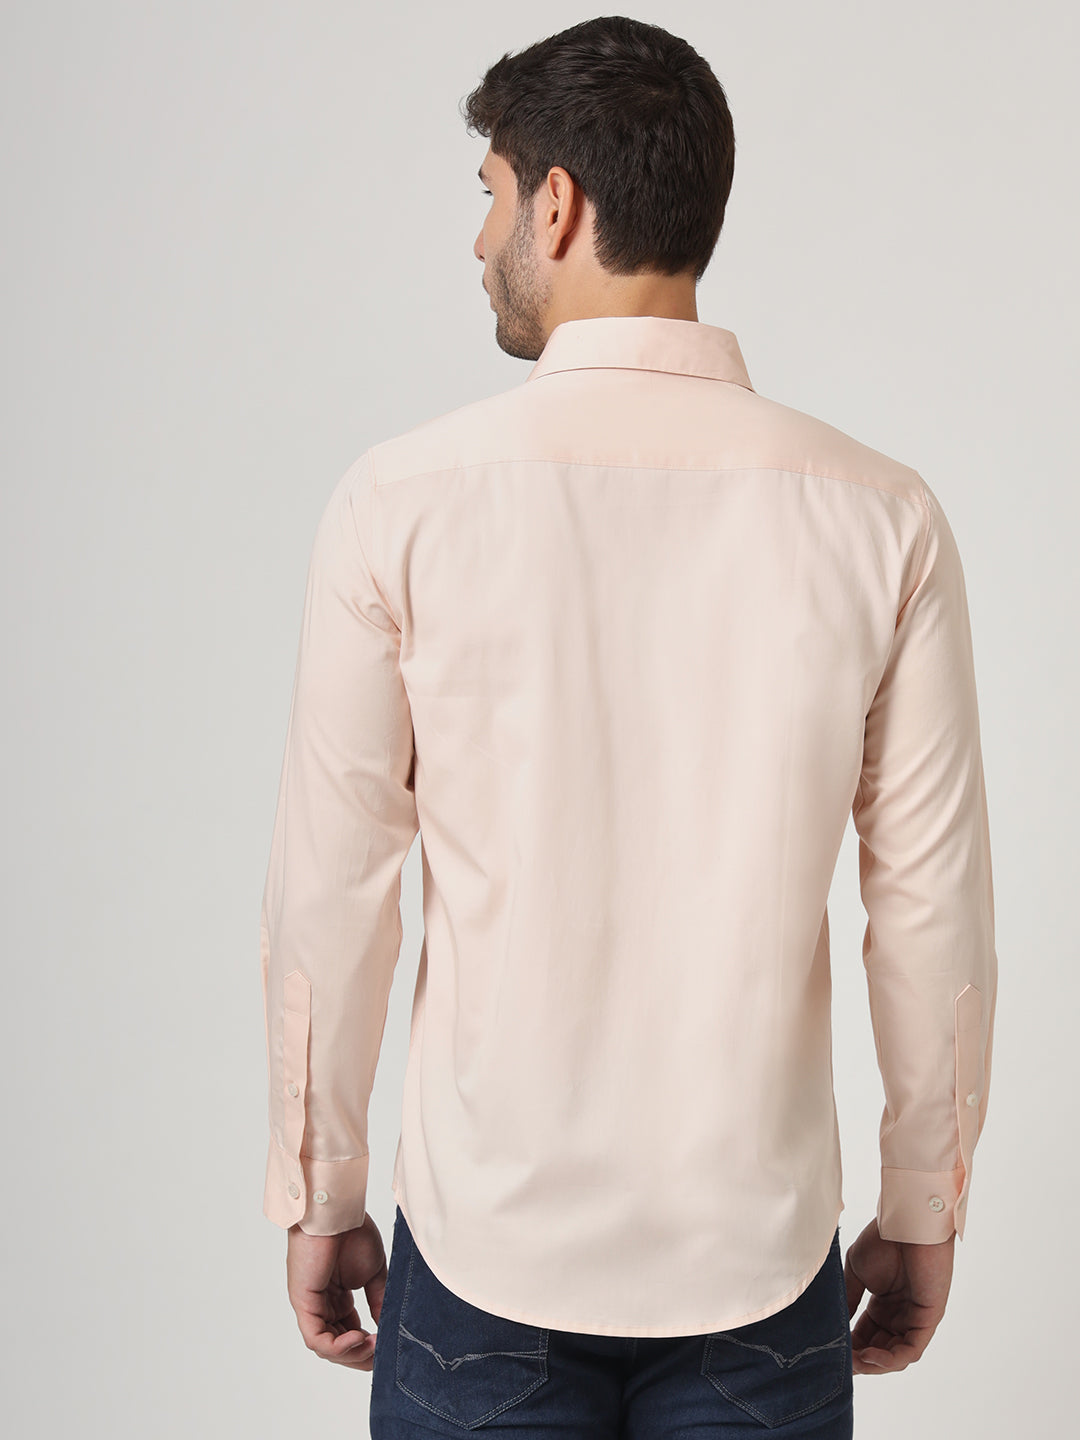 Premium Cotton Lycra Peach Shirt